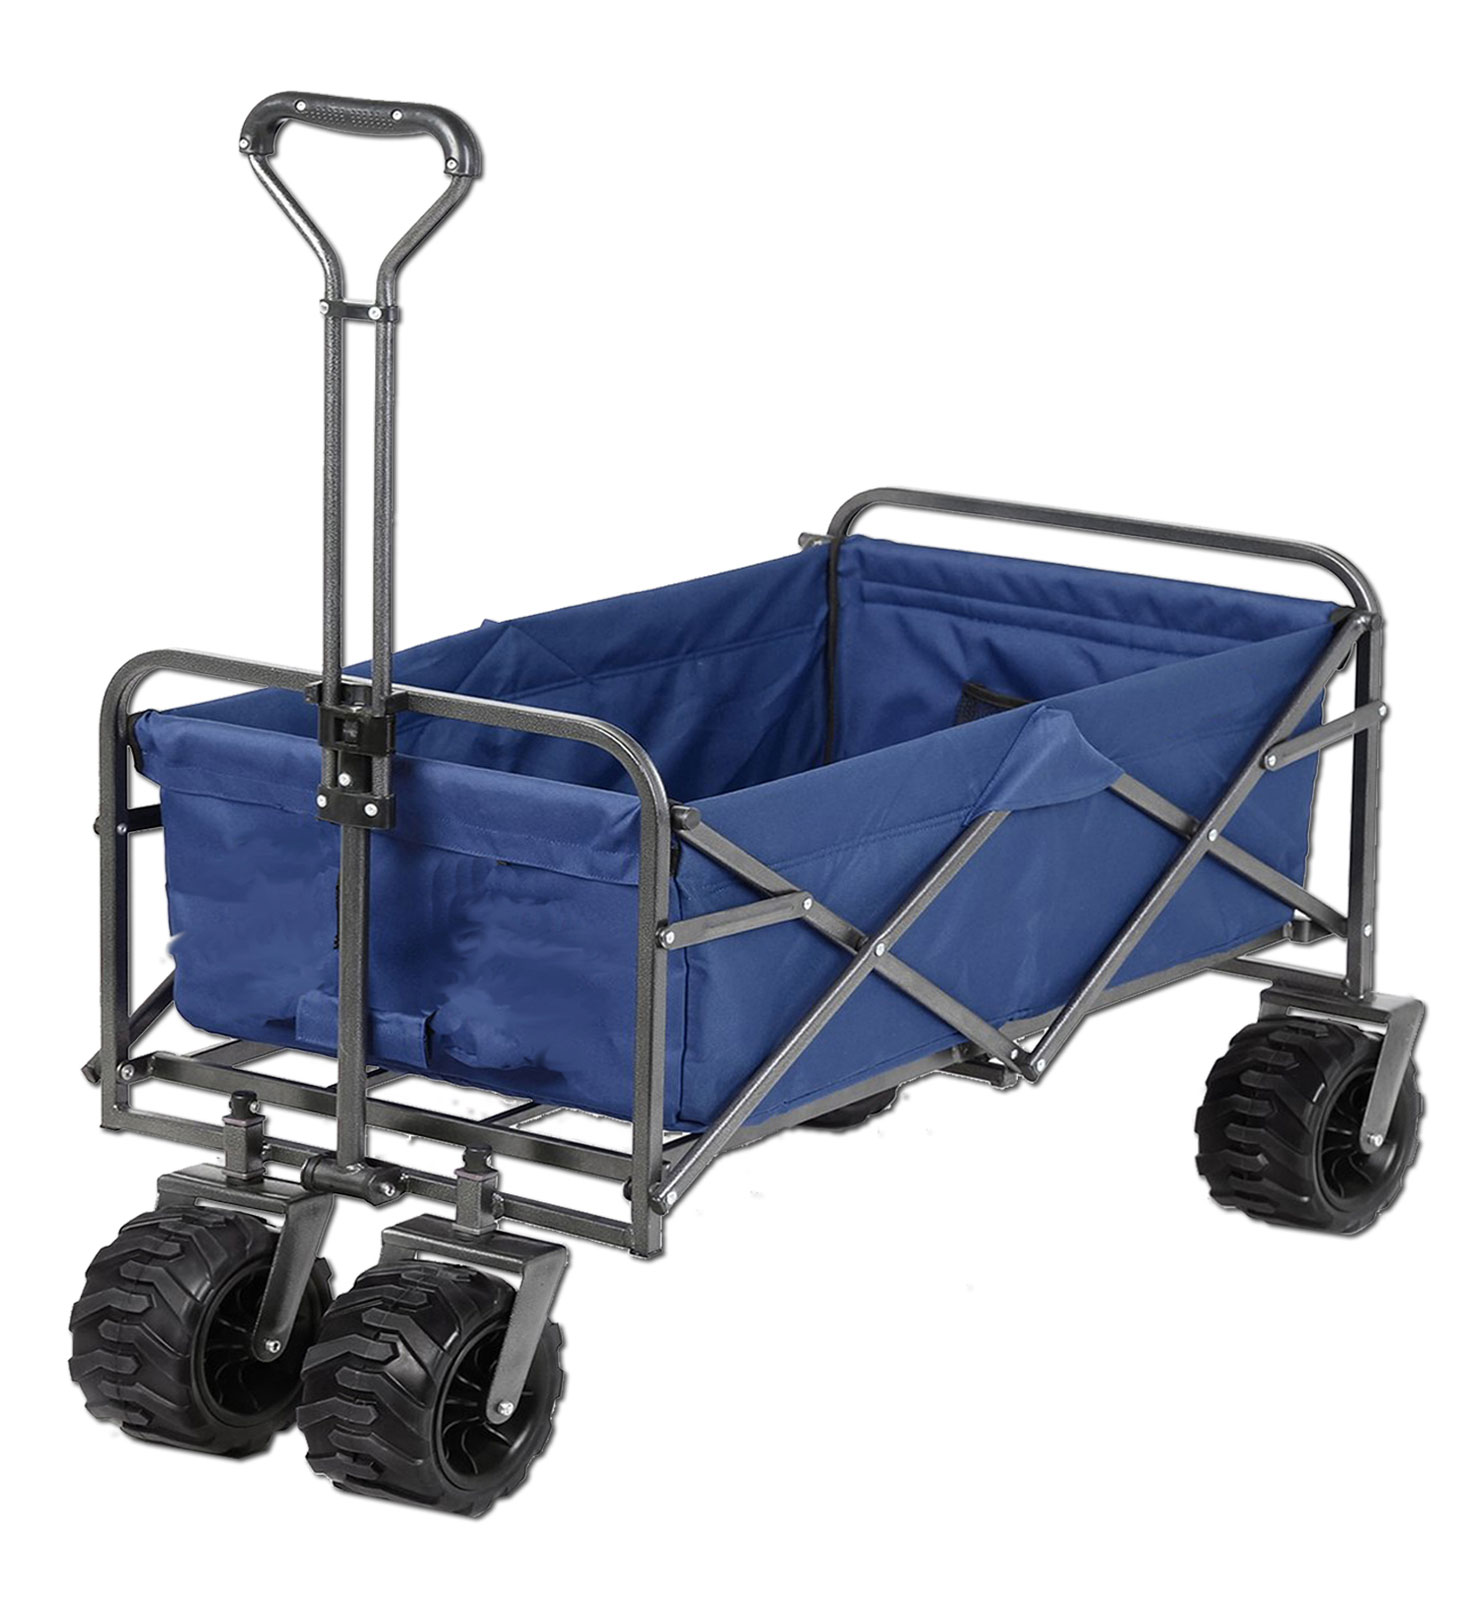 Wagon Folding Cart Collapsible Garden Beach Utility Outdoor Camping Sports Black 